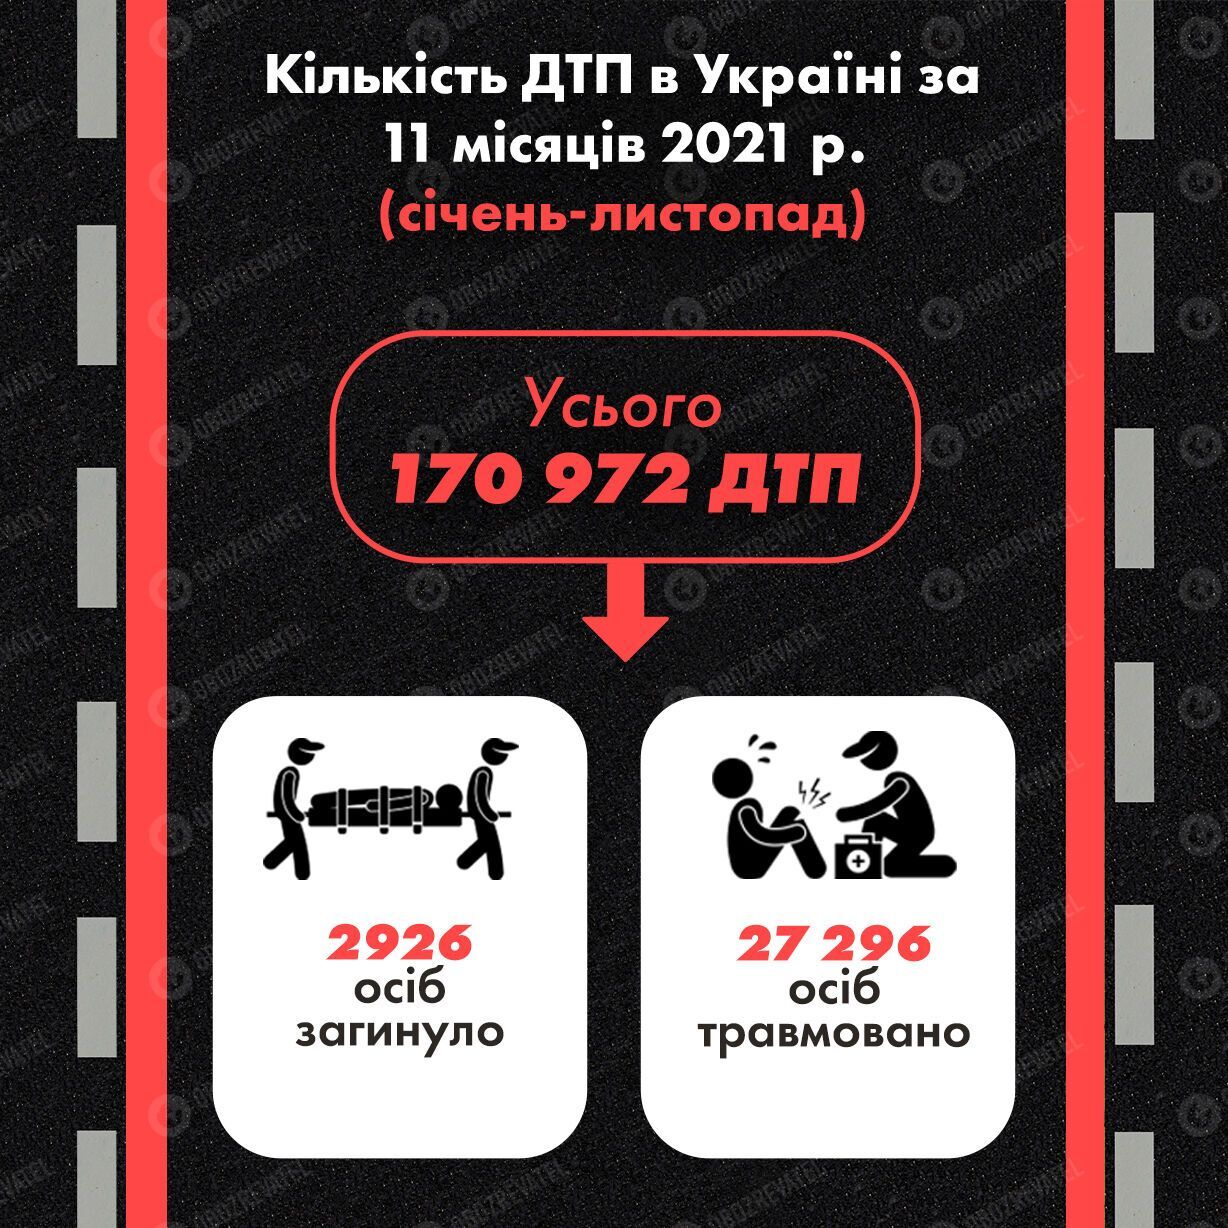 Статистика ДТП в Украине за 11 месяцев 2021 года